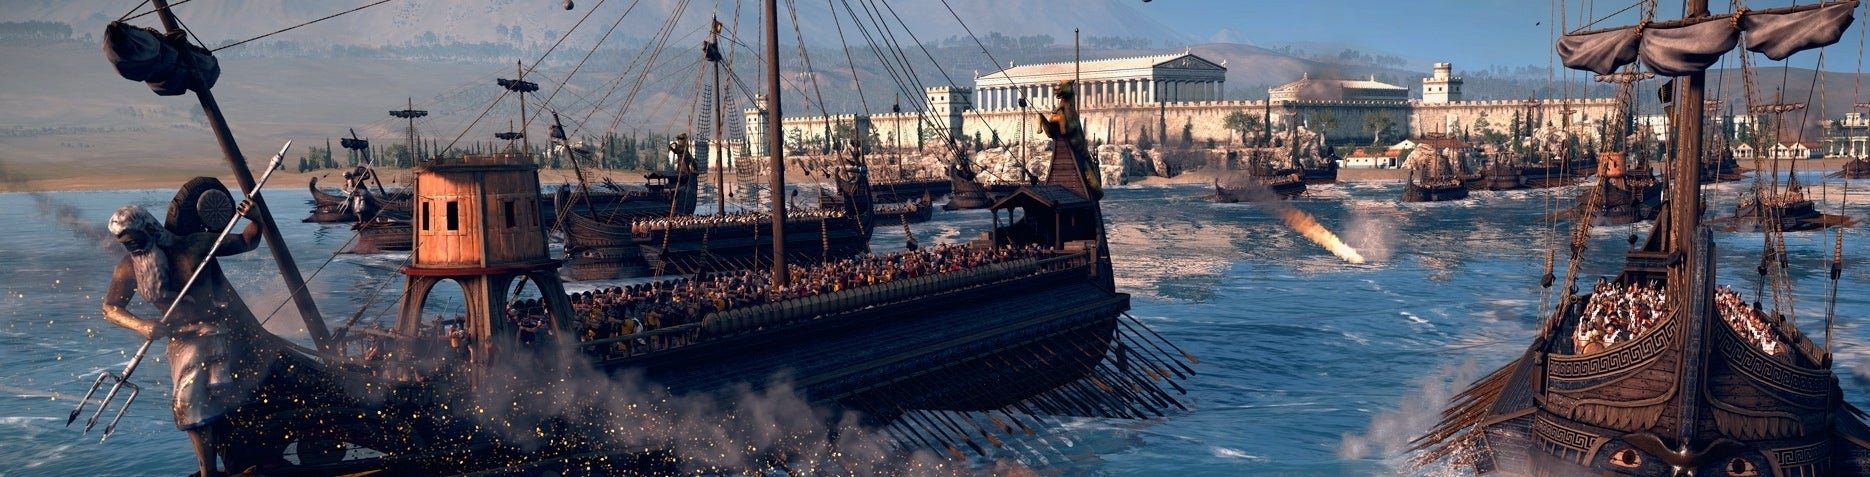 Imagem para Total War: Rome II - Análise